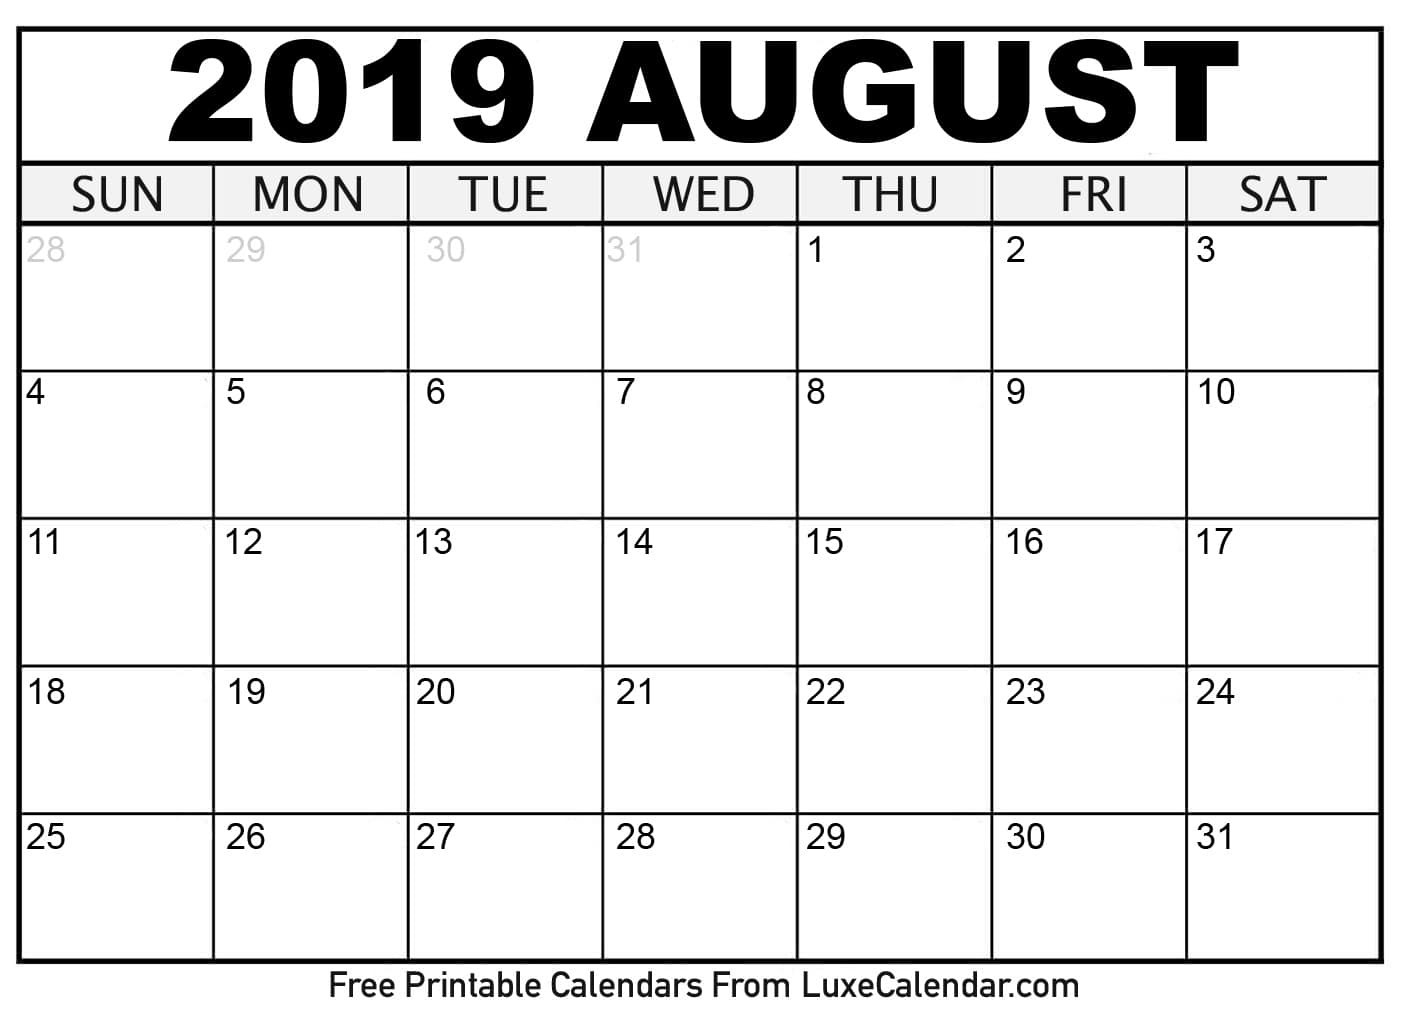 Blank August 2019 Calendar Printable - Luxe Calendar-Luxe Calendar Aug 2020 Blank Printable